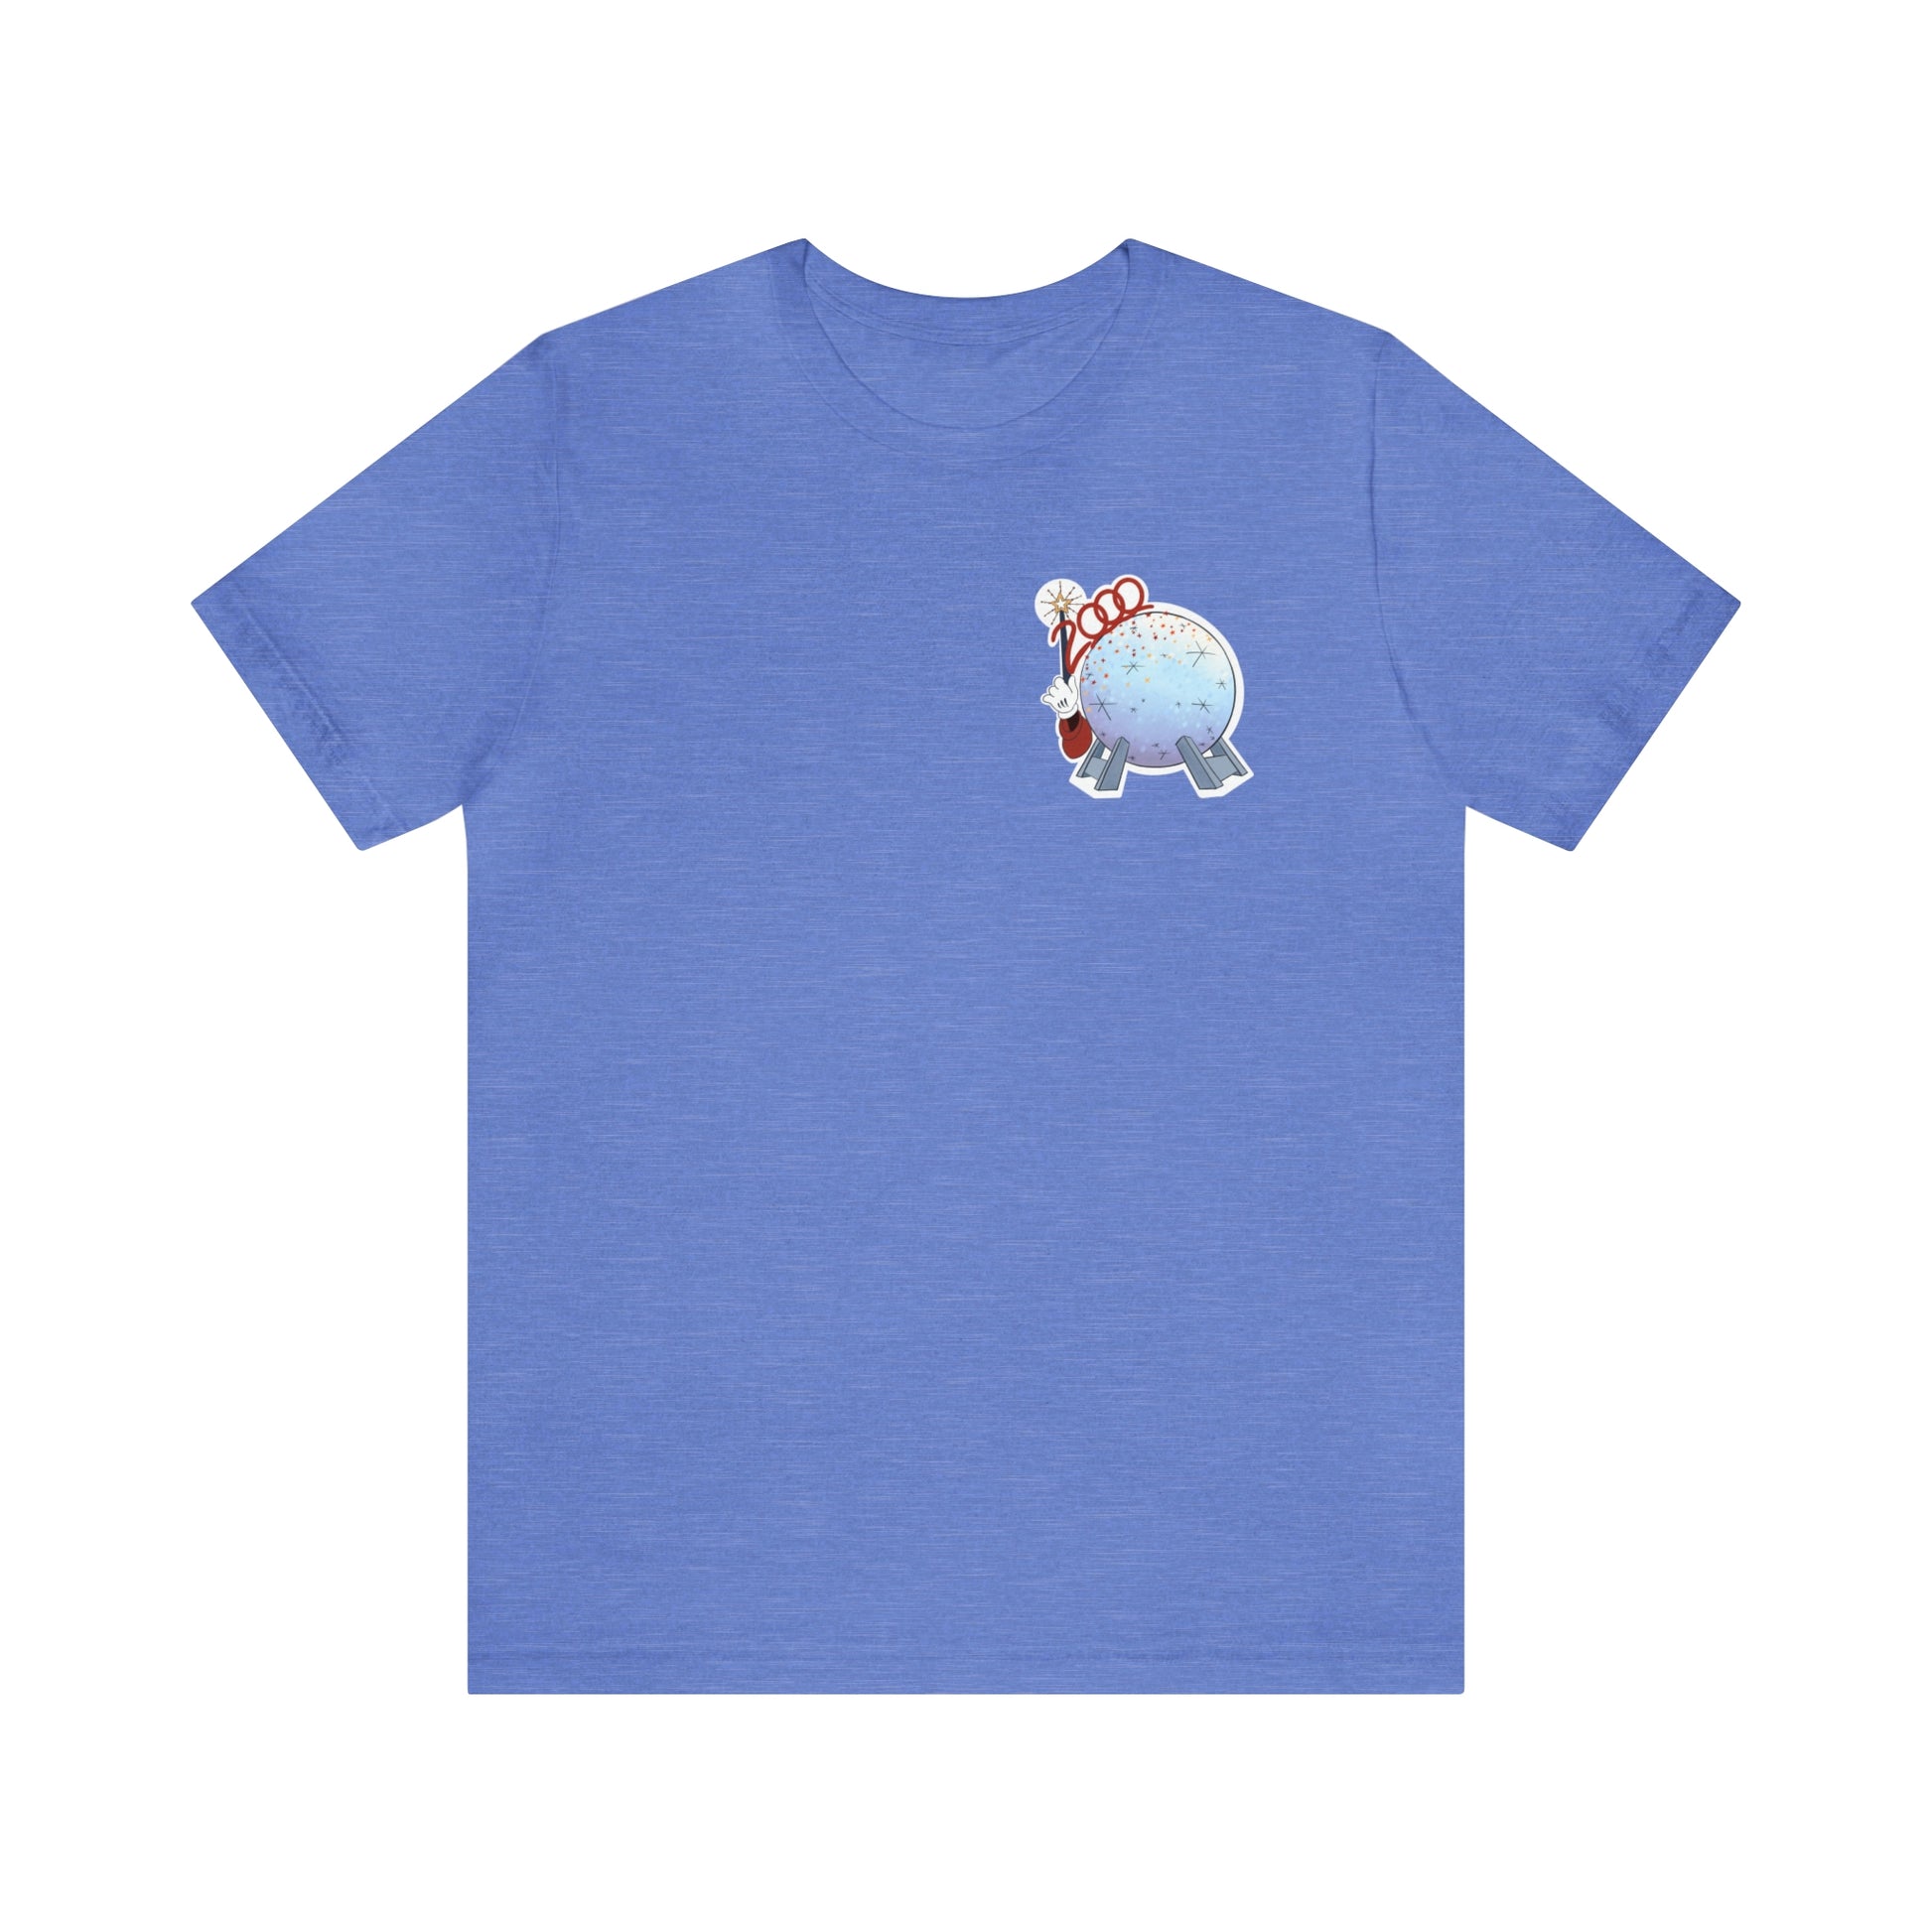 Blue Epcot 2000 Wand Tee Shirt 